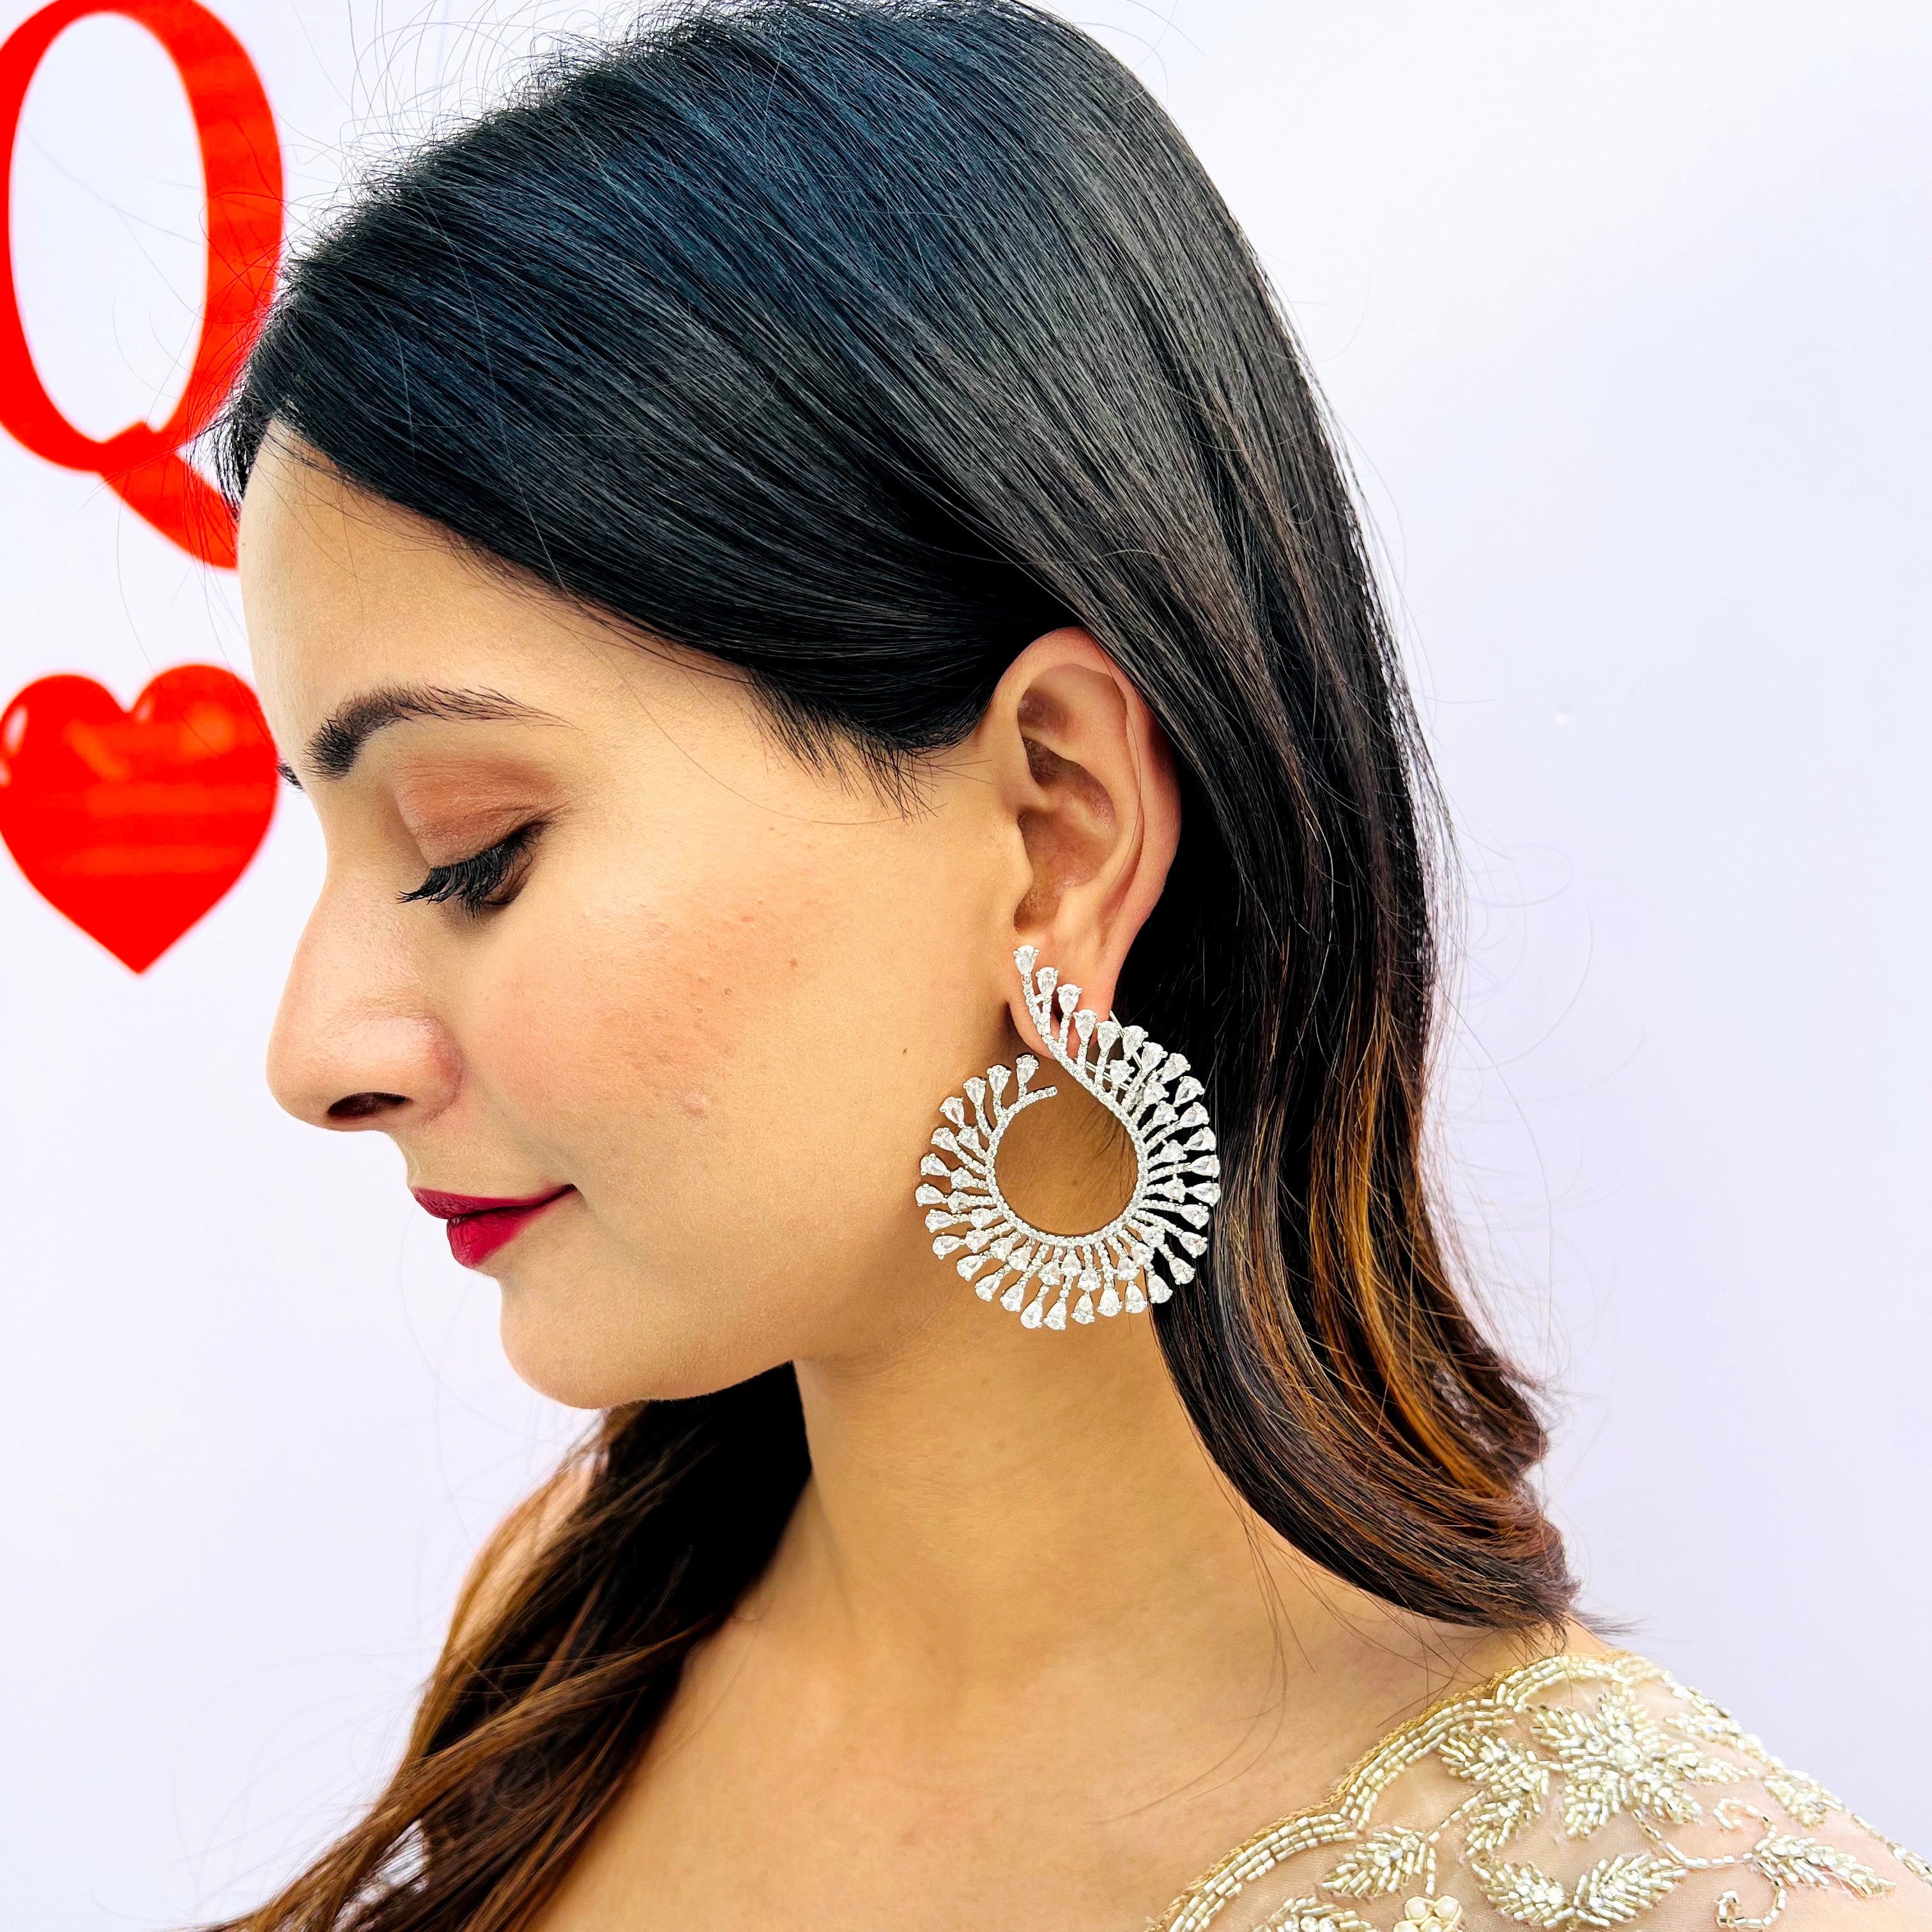 Ad Sofia earrings